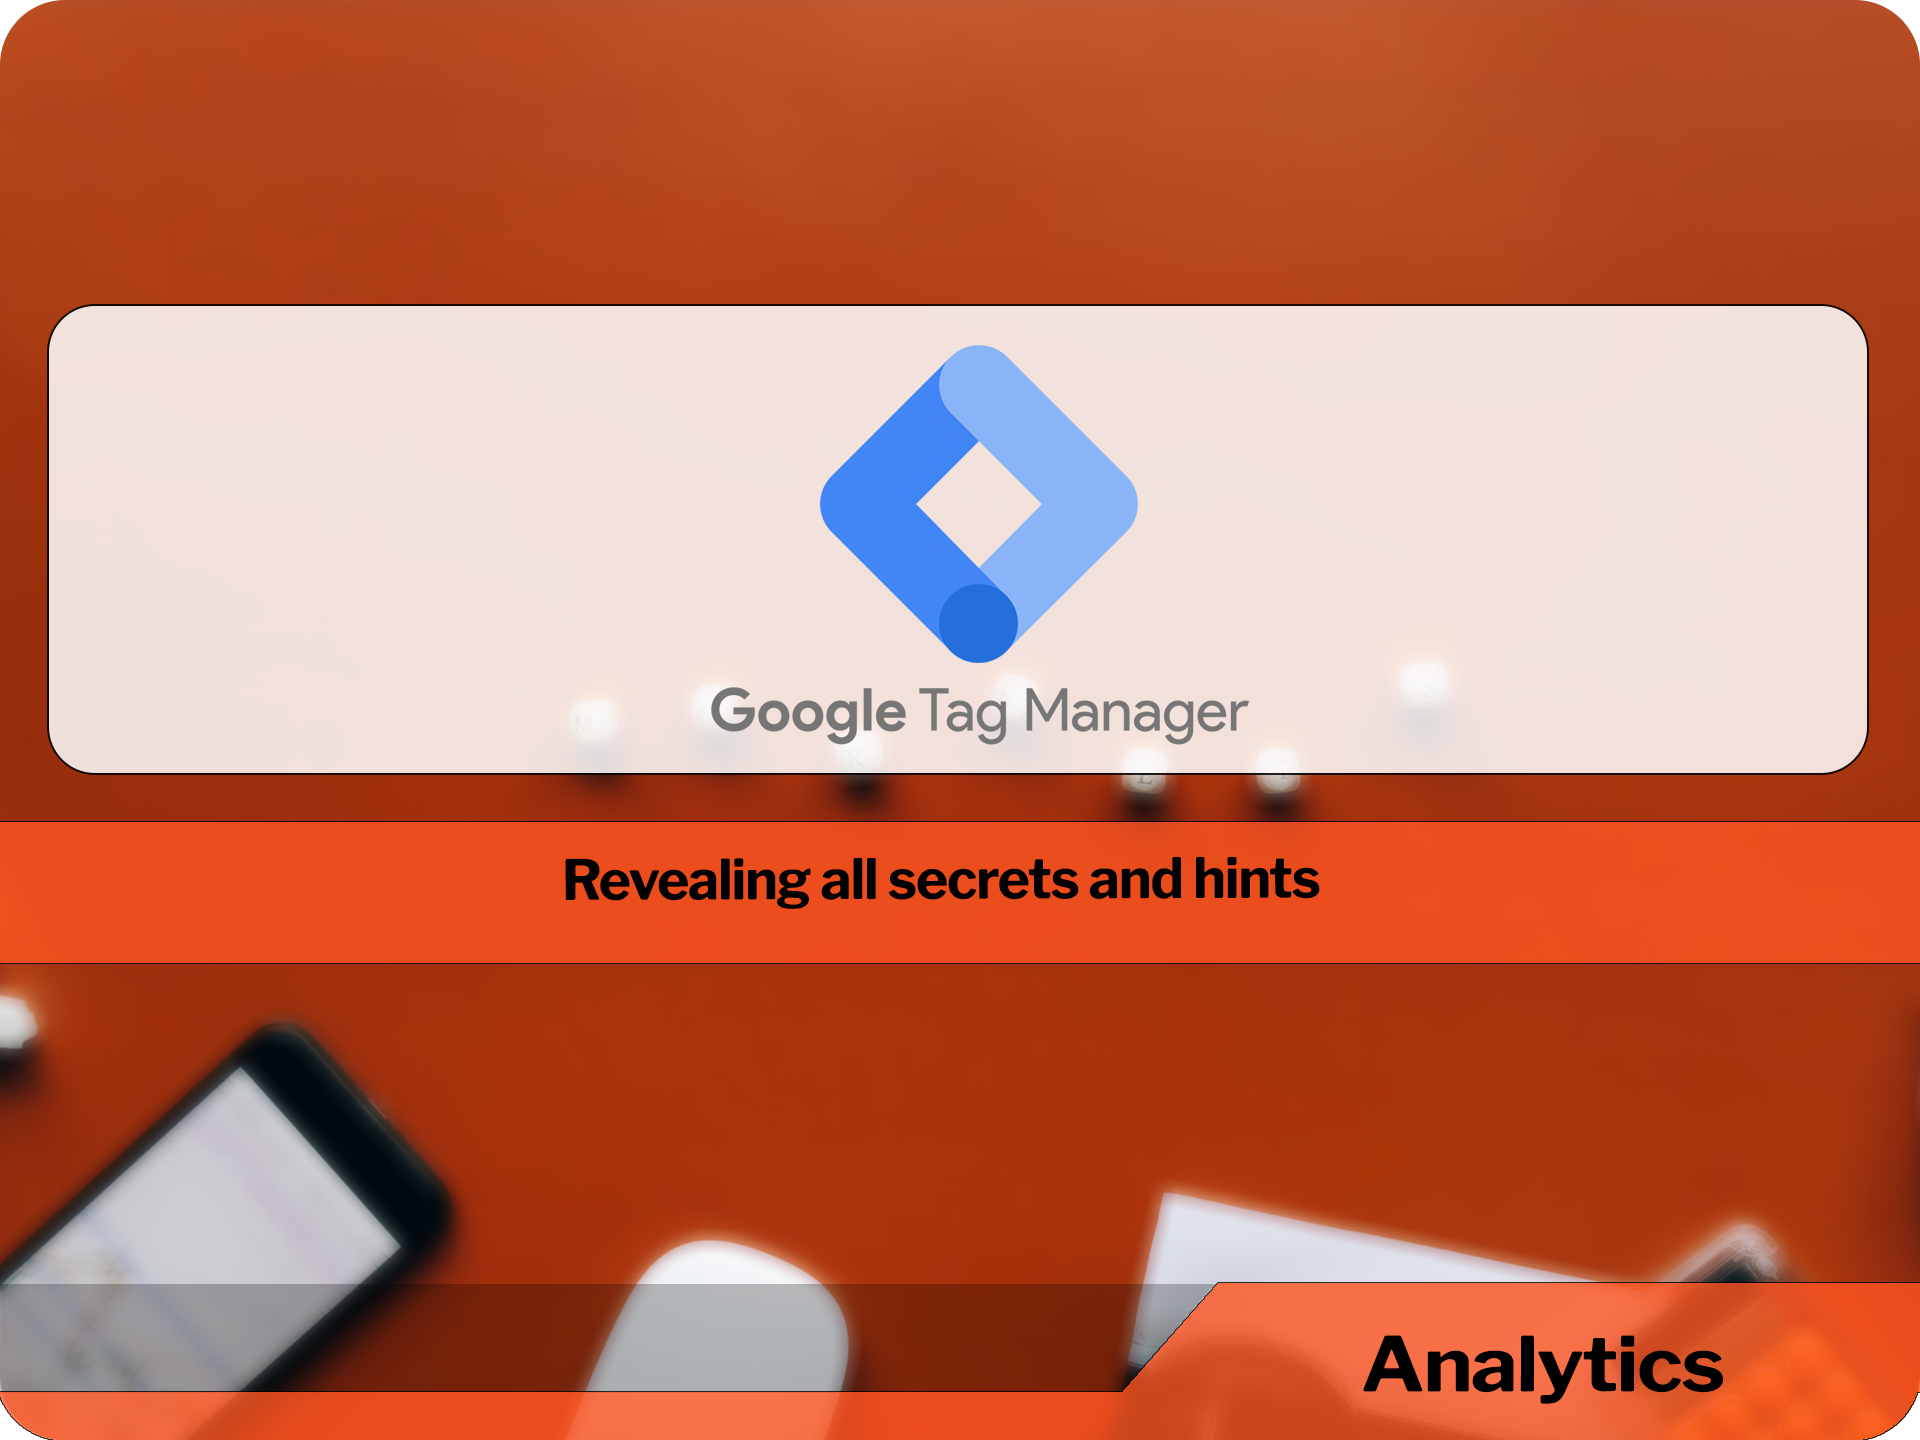 How to configure Analytics via Google Tag Manager